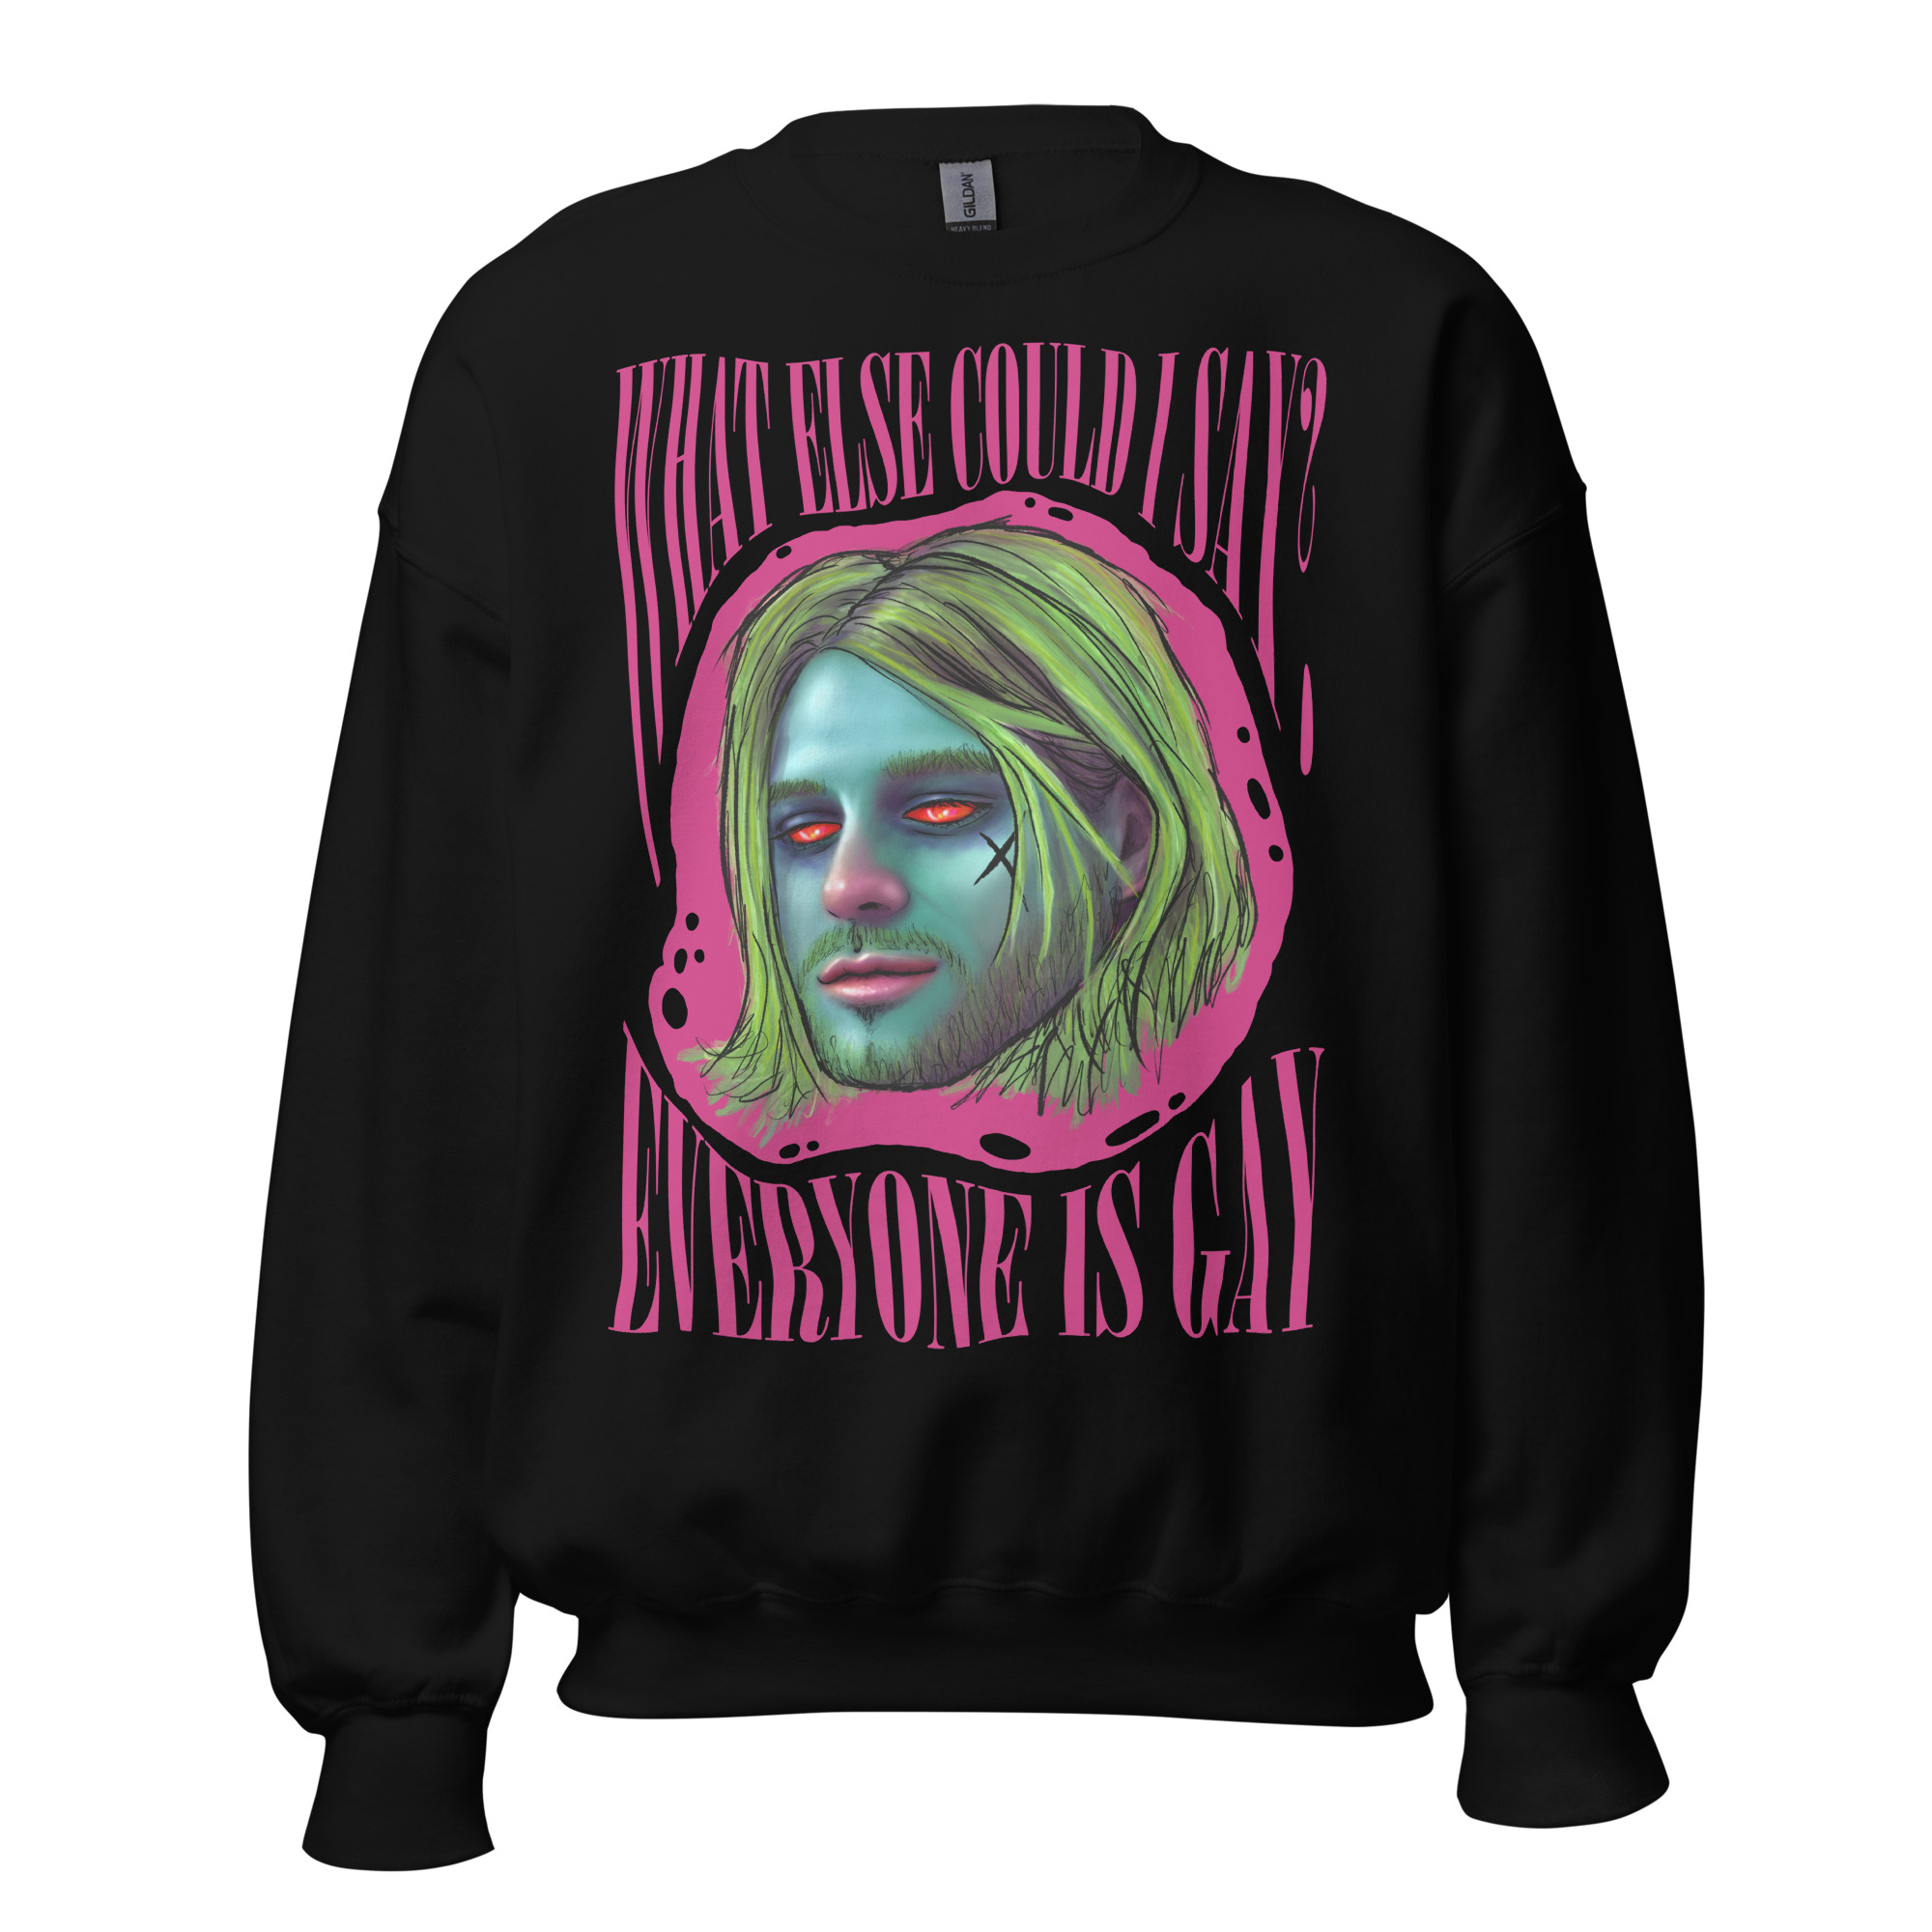 Featured image for “Everyone is Gay - Unisex Gildan Sweatshirt”